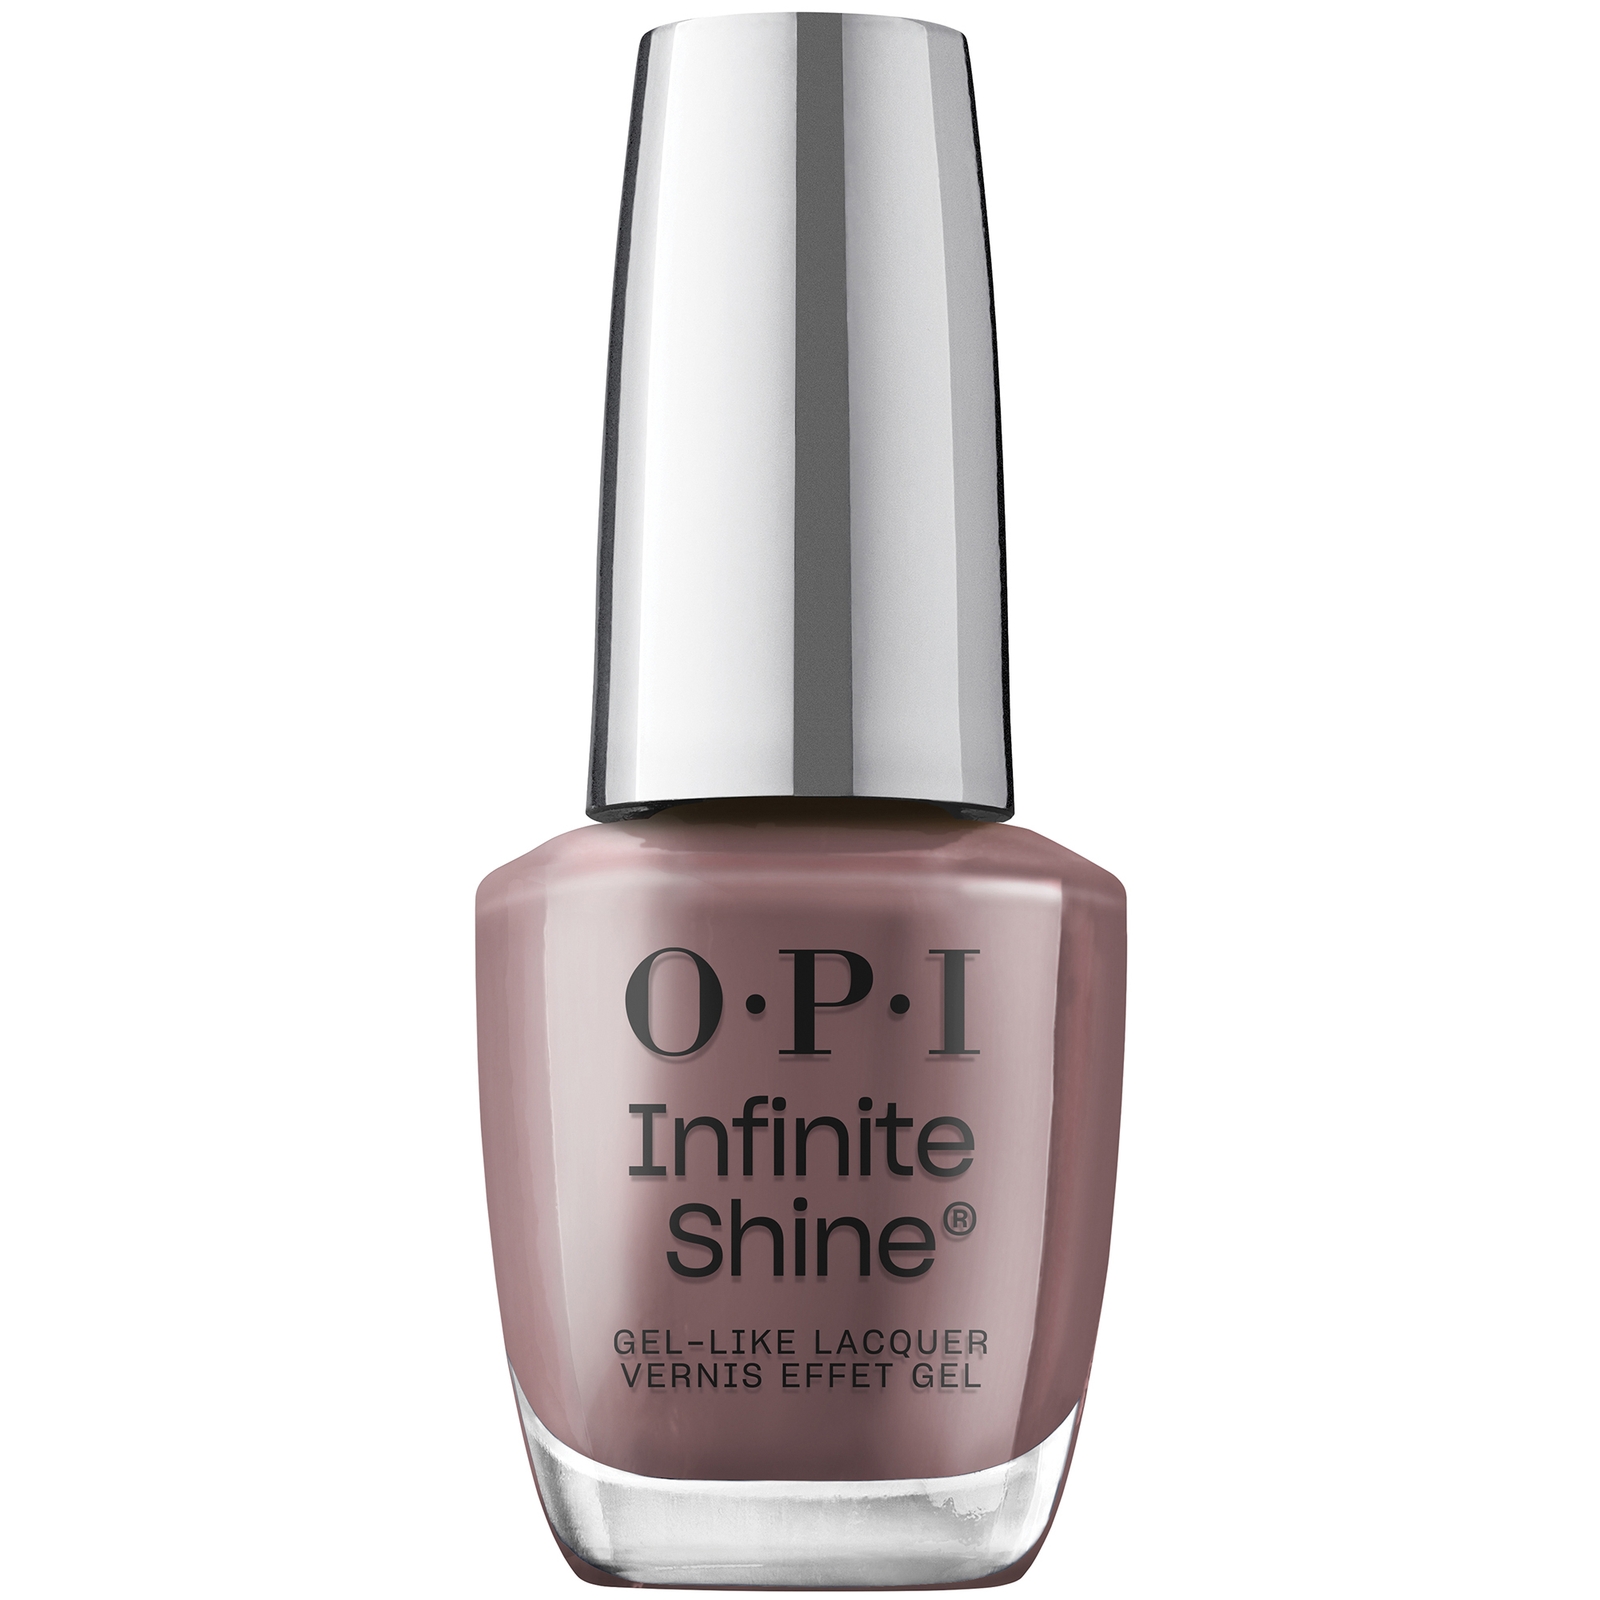 Opi Infinite Shine Long-wear Nail Polish - You Don't Know Jacques 15ml In White